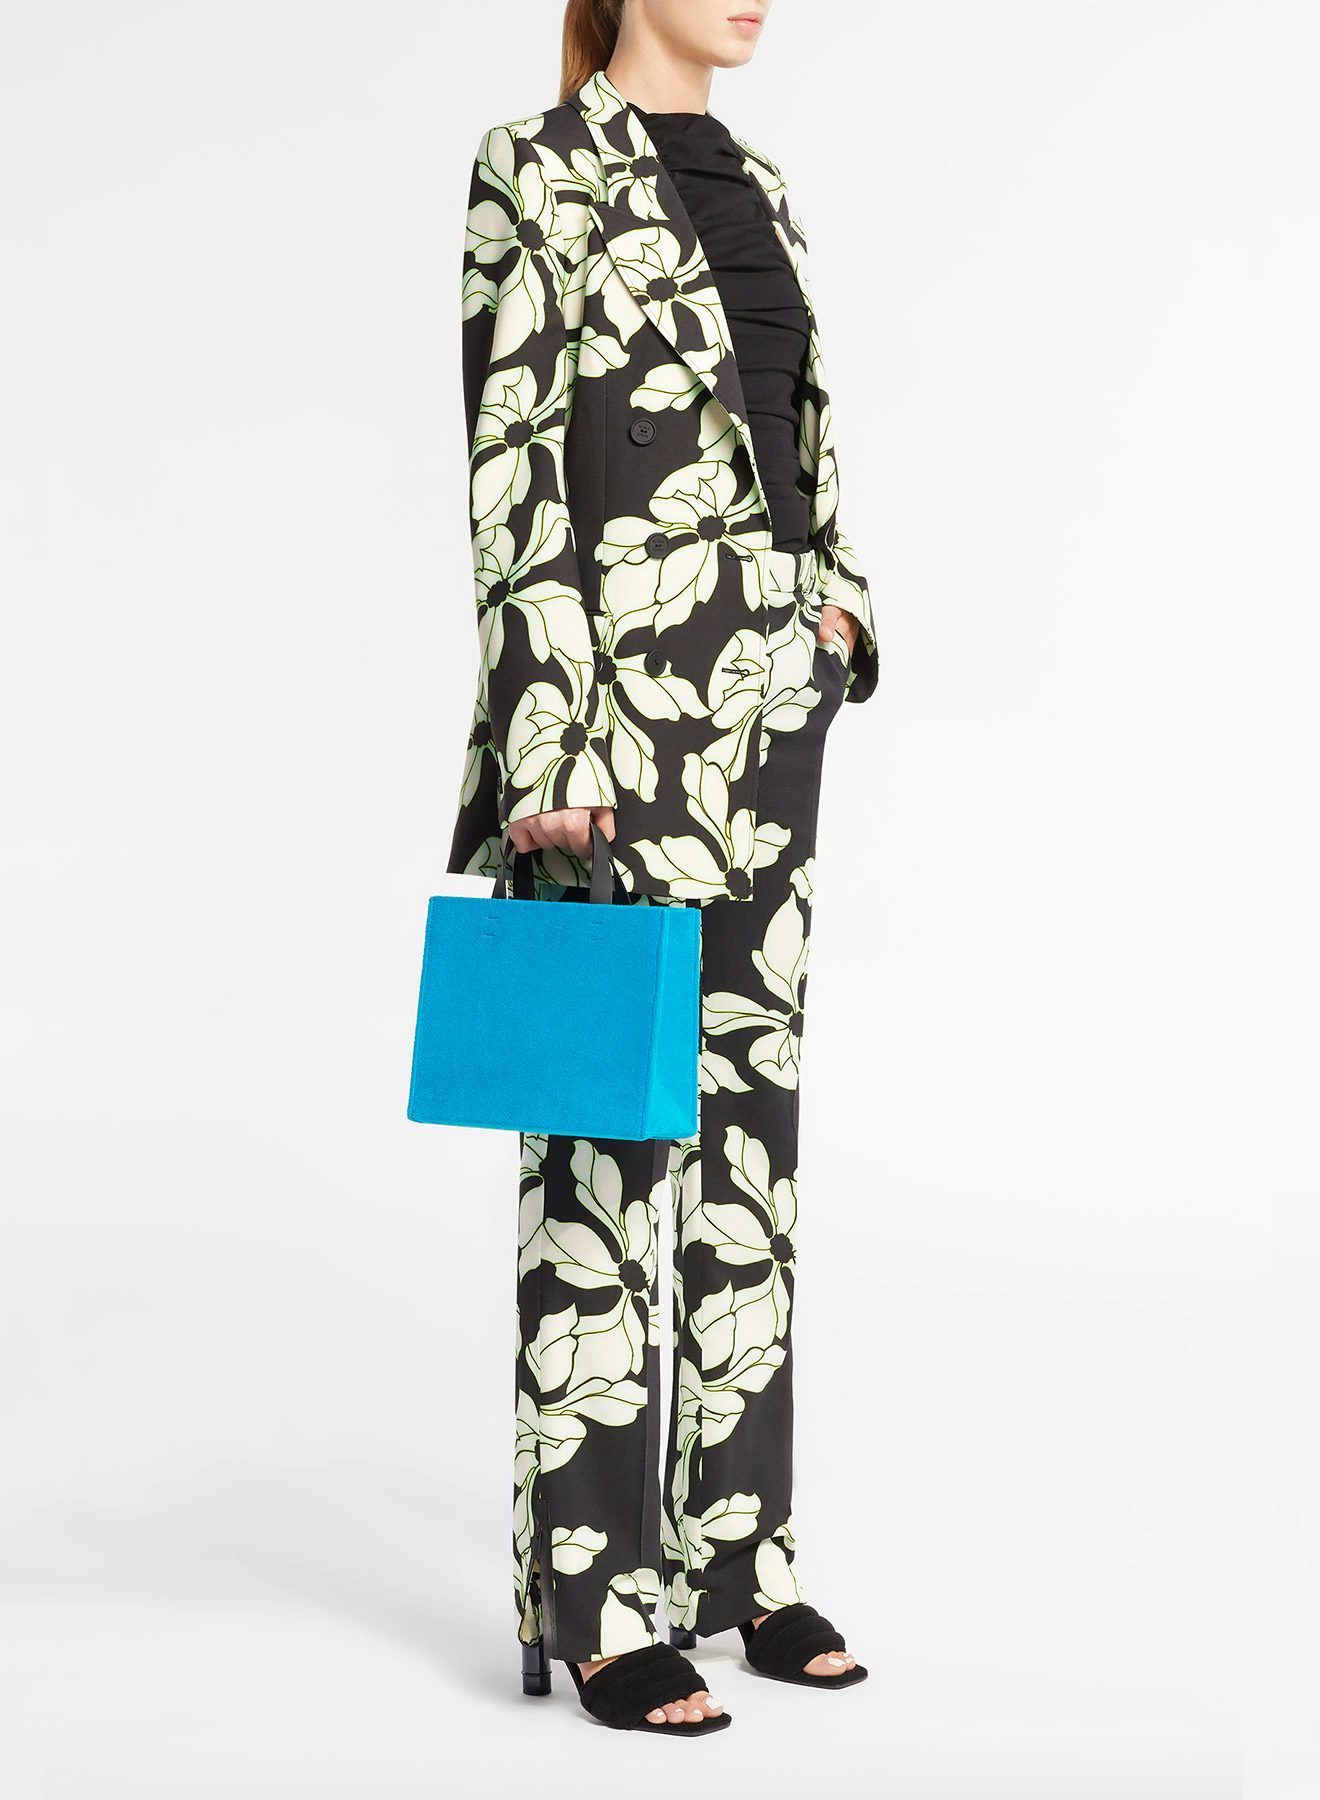 Cabas Moyen en Tissu Eponge Bleu Cyan avec Etiquette Logo Nina Ricci - Nina Ricci